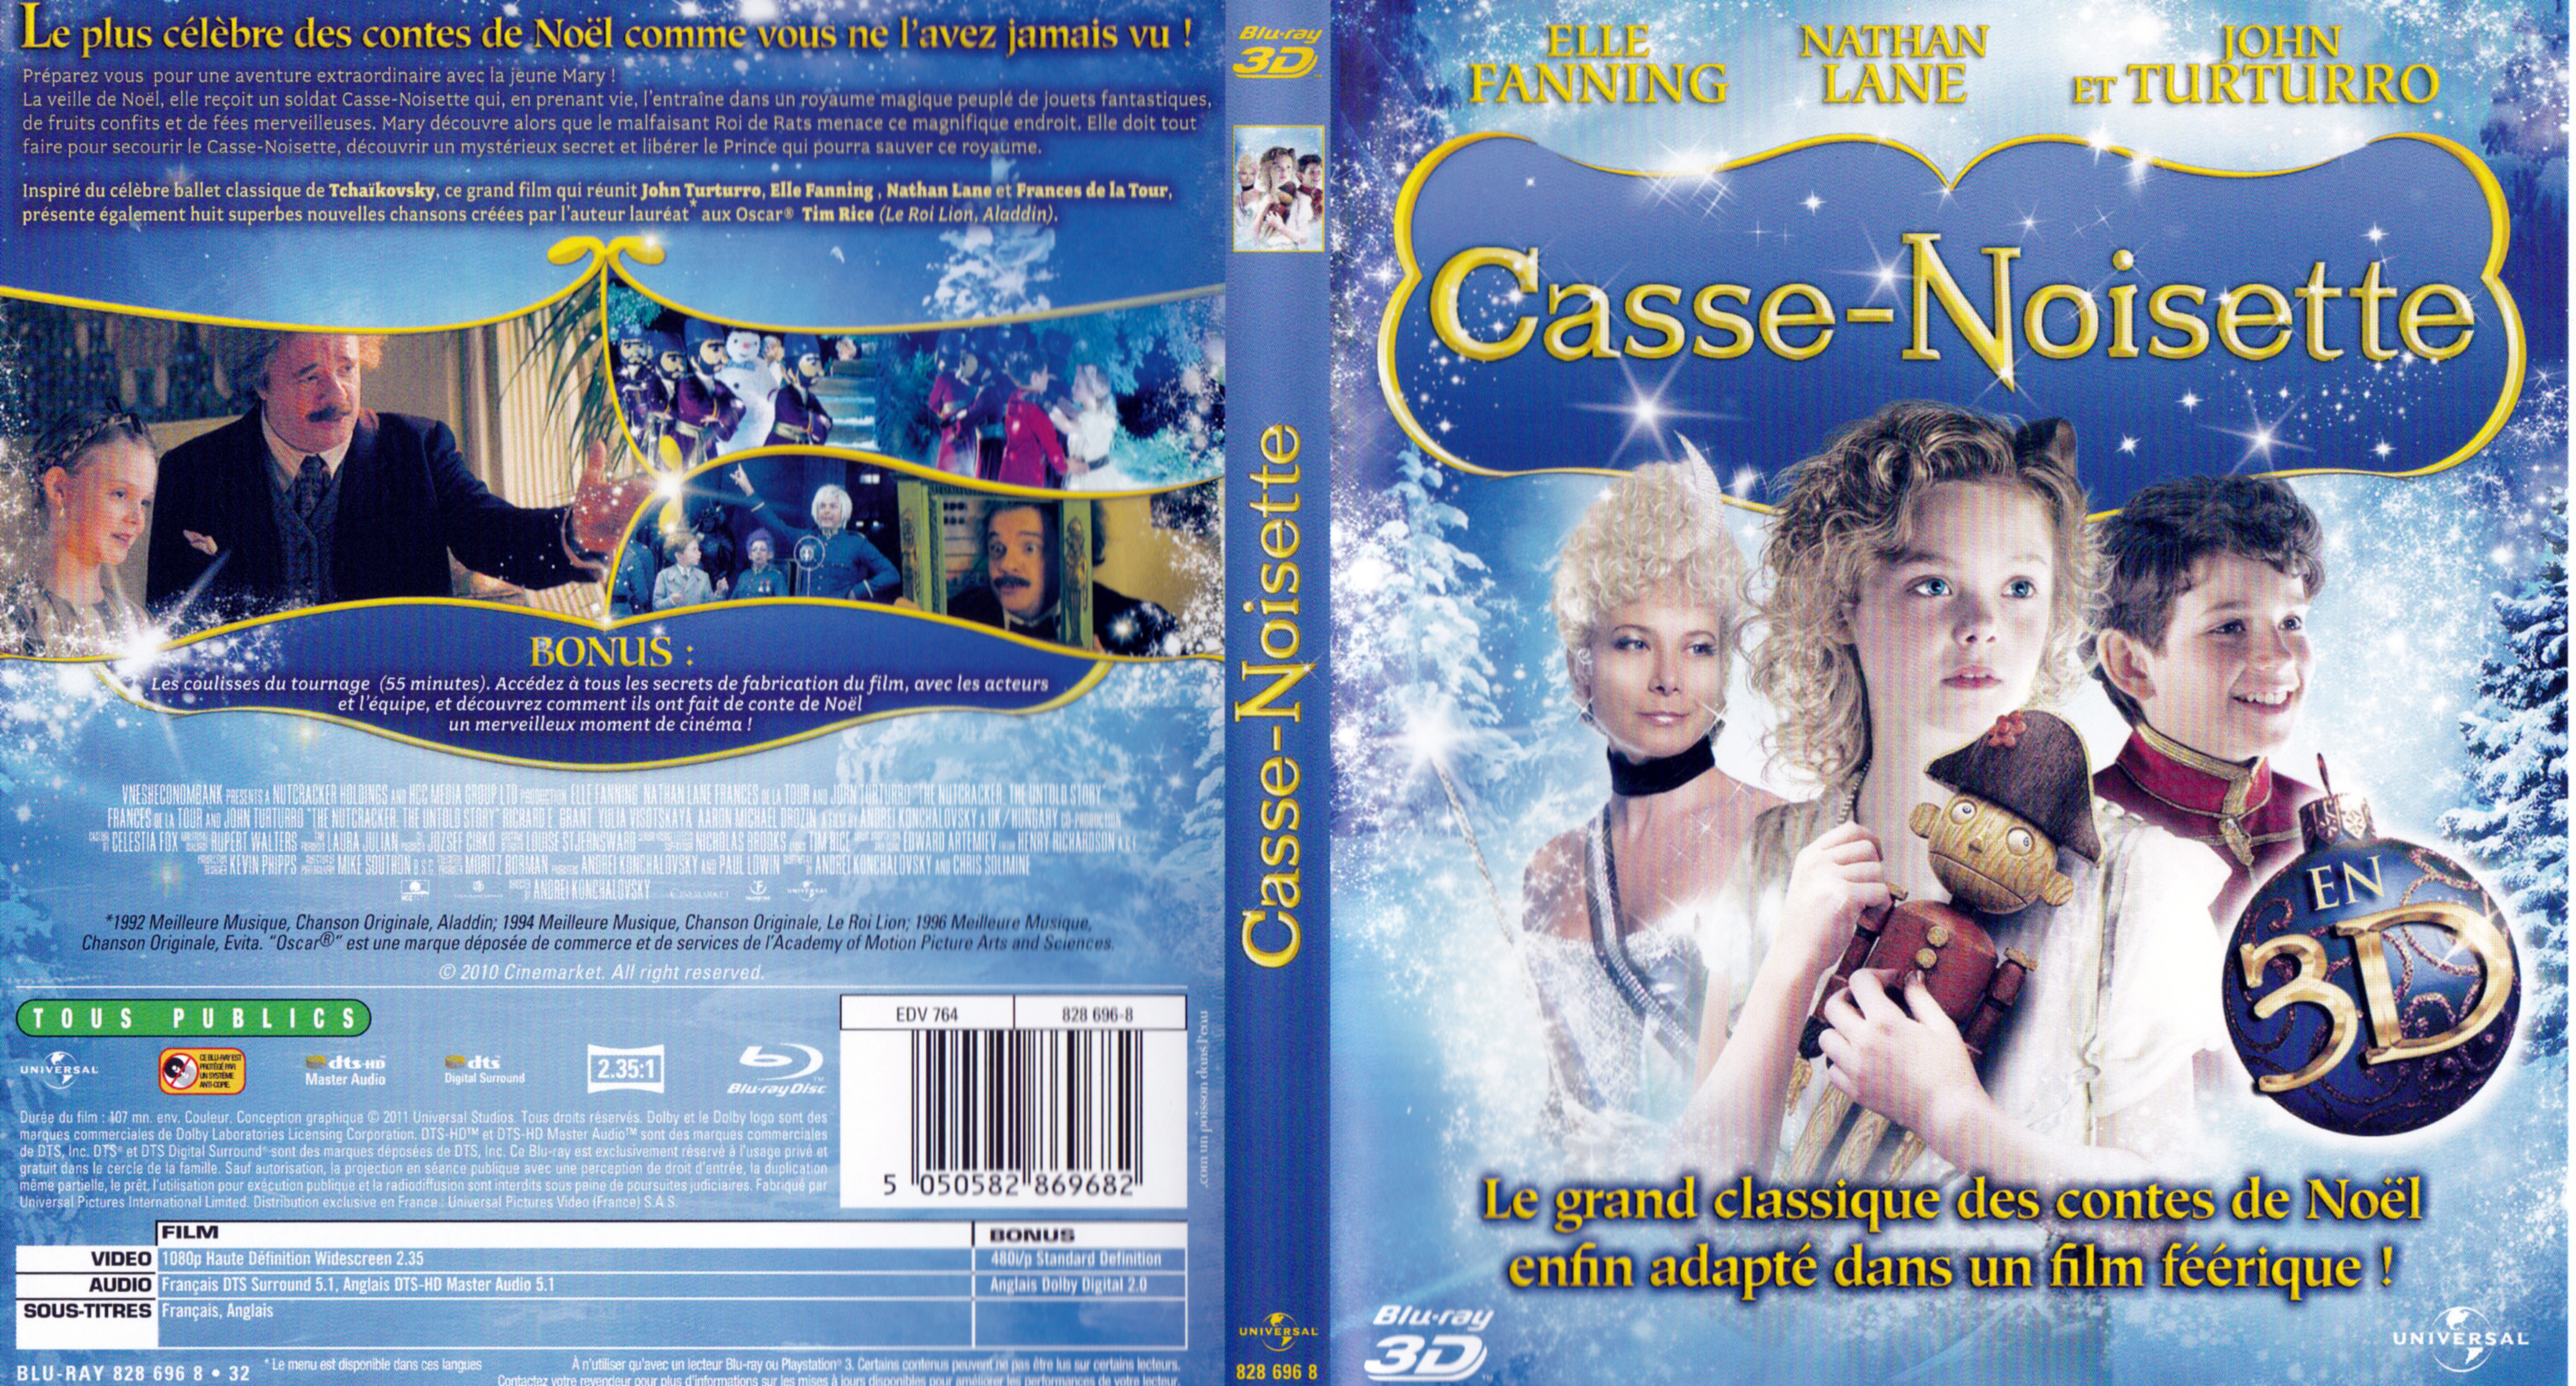 Jaquette DVD Casse-noisette (BLU-RAY)